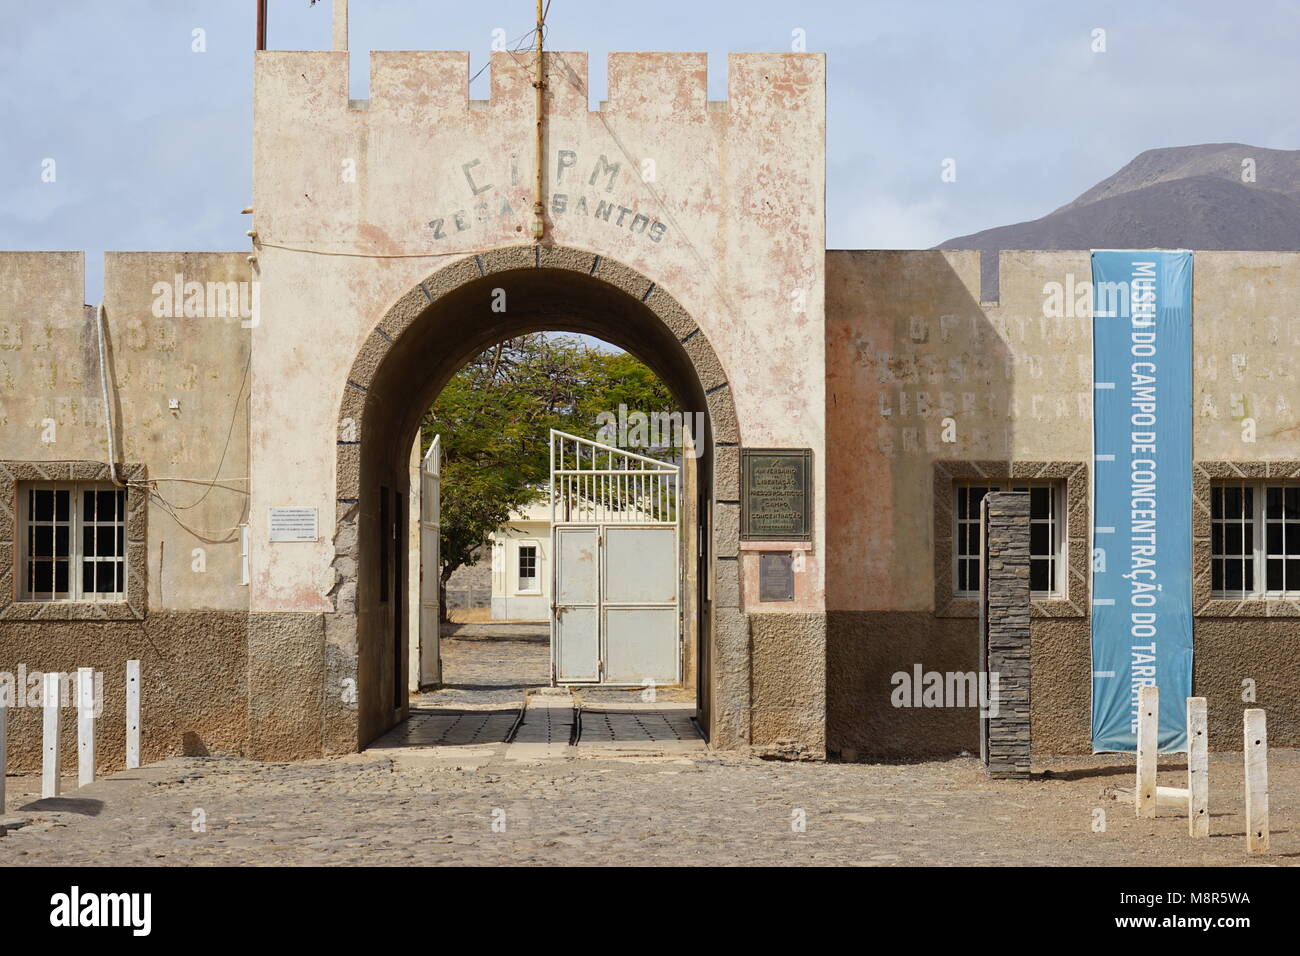 Entrée de la prison de Tarrafal, Museu do Tarrafal, Camp de Tarrafal, Tarrafal, l'île de Santiago, Cap-Vert Banque D'Images